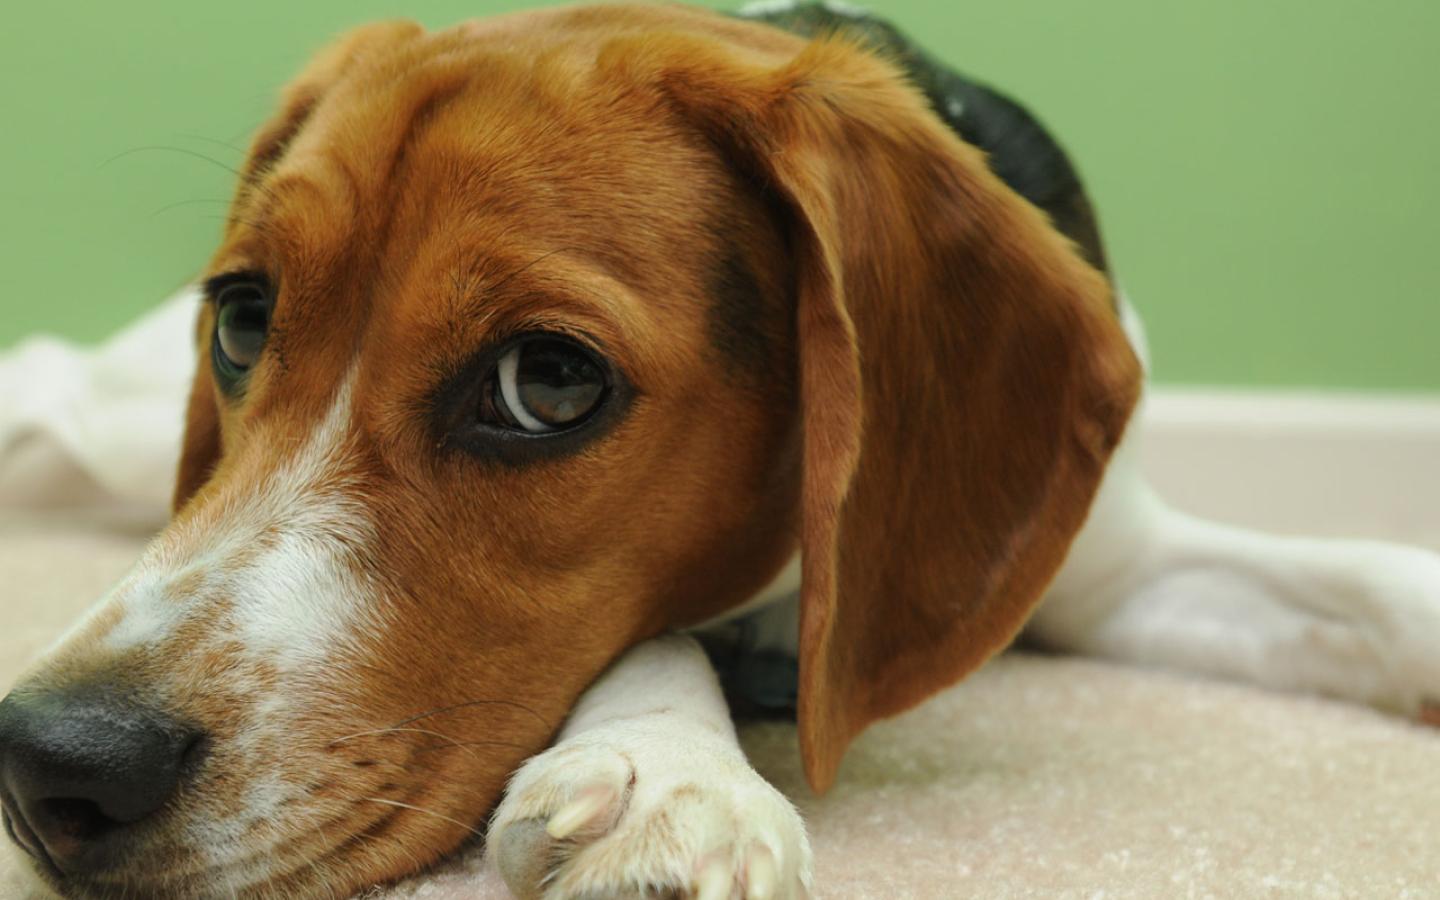 Beagle - In Contemplative Mood Wallpaper #4 1440 x 900 